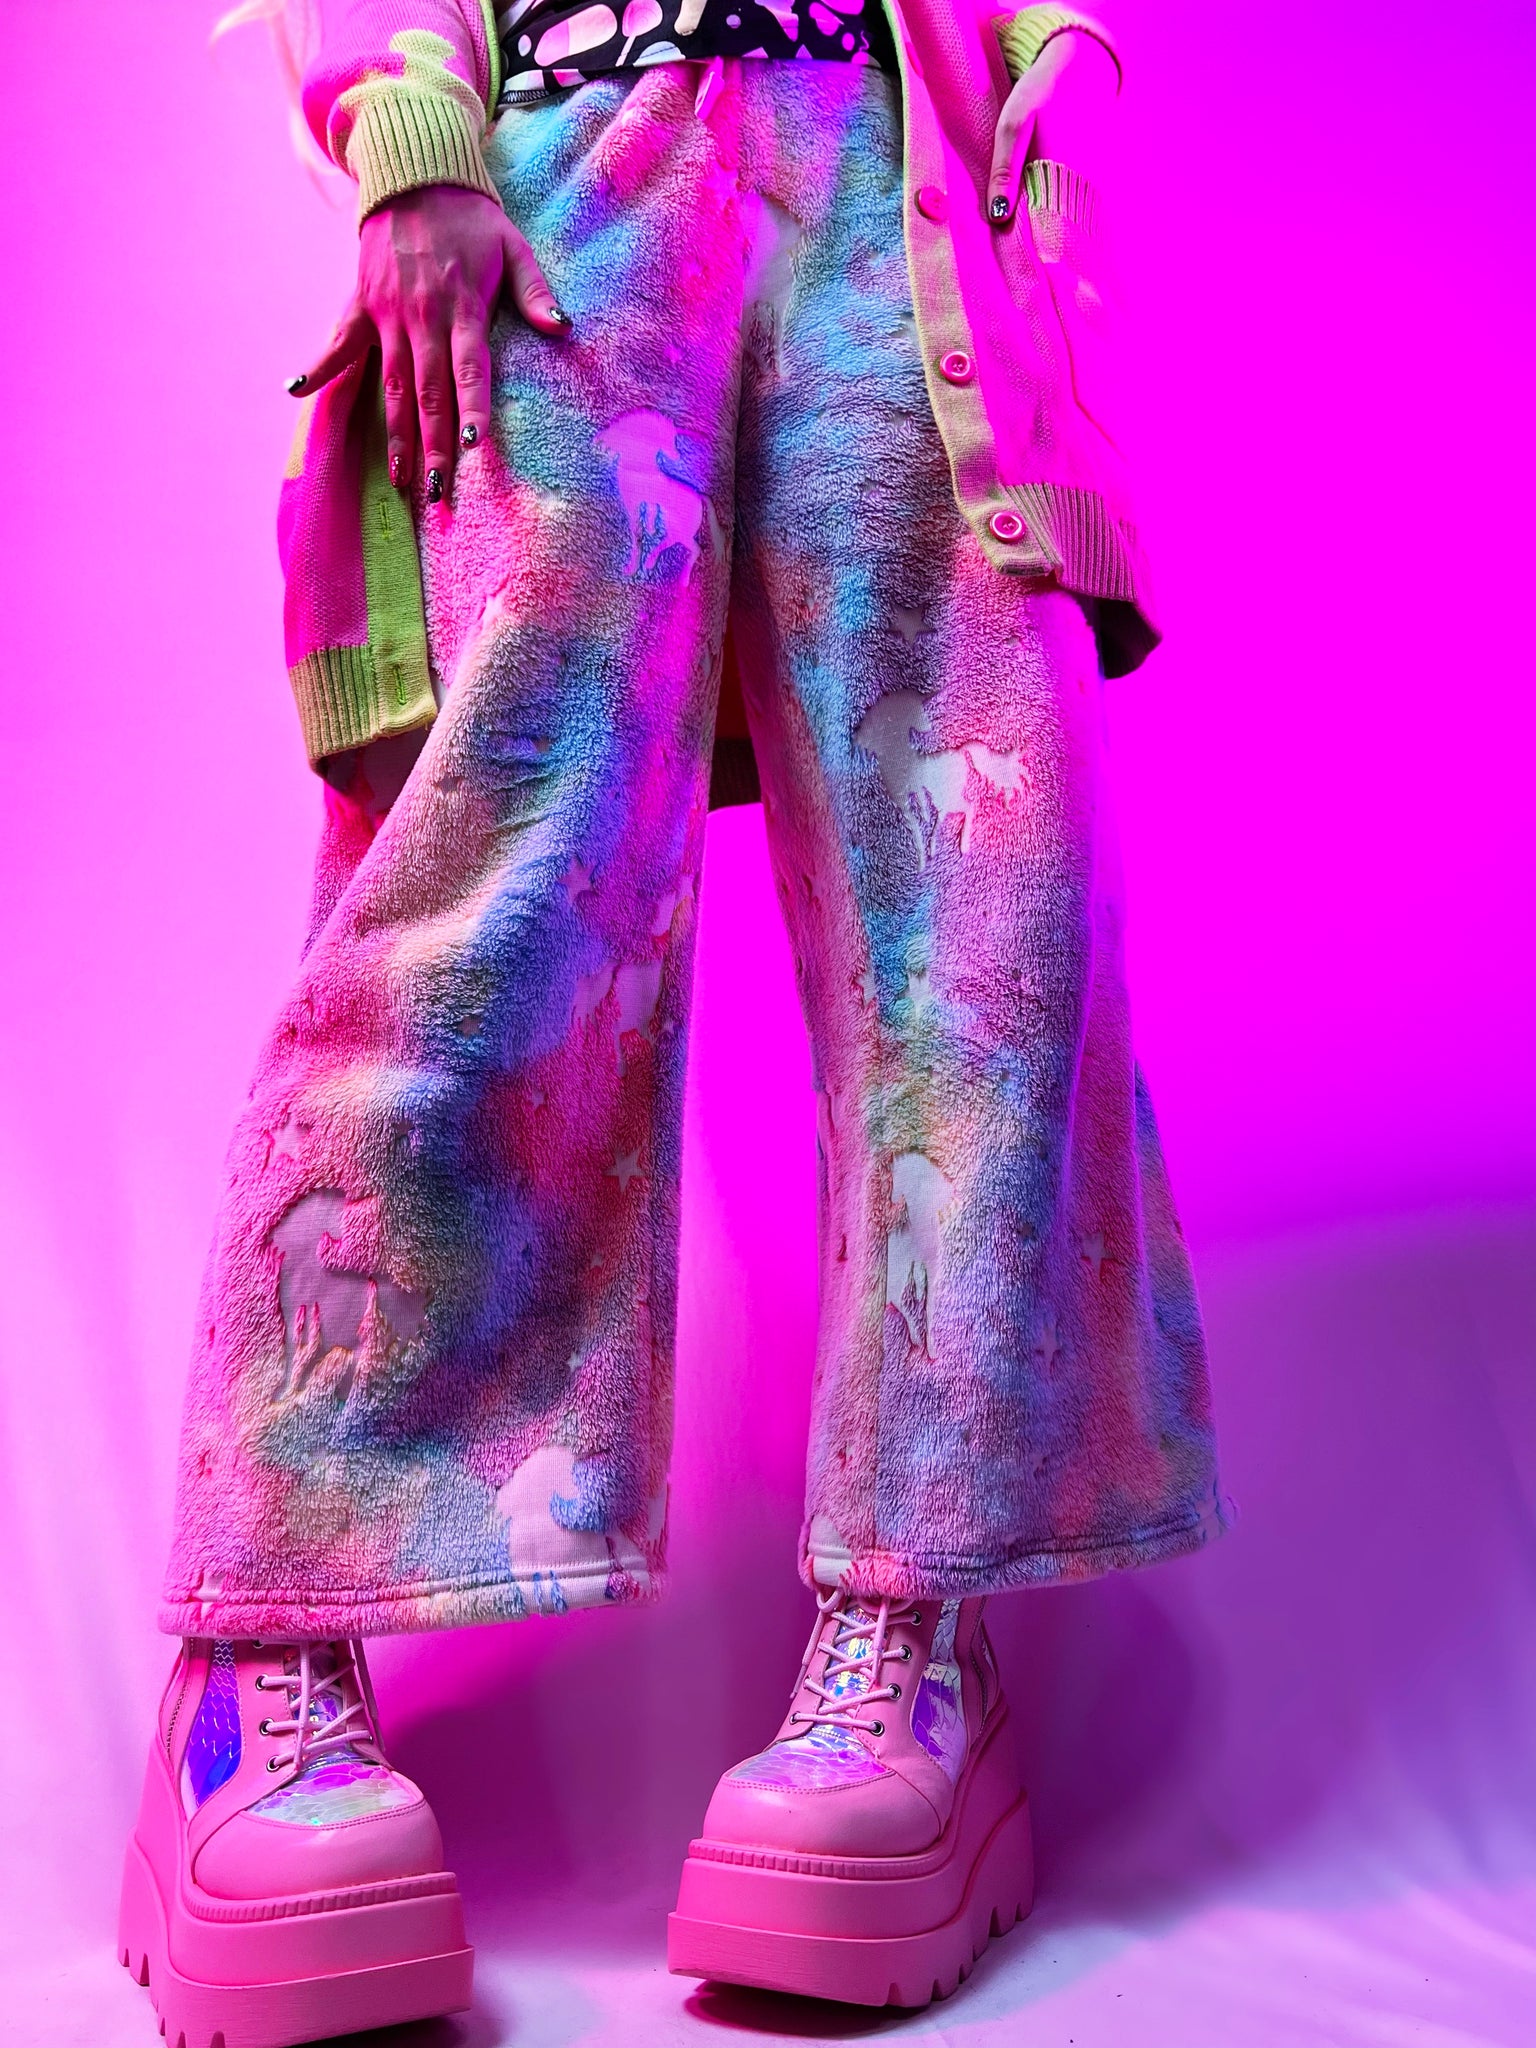 Pink Rainbow Unicorn Mens Pajama Pant ComfortSoft Cotton Printed Lounge  Pants with Drawstring and Pockets